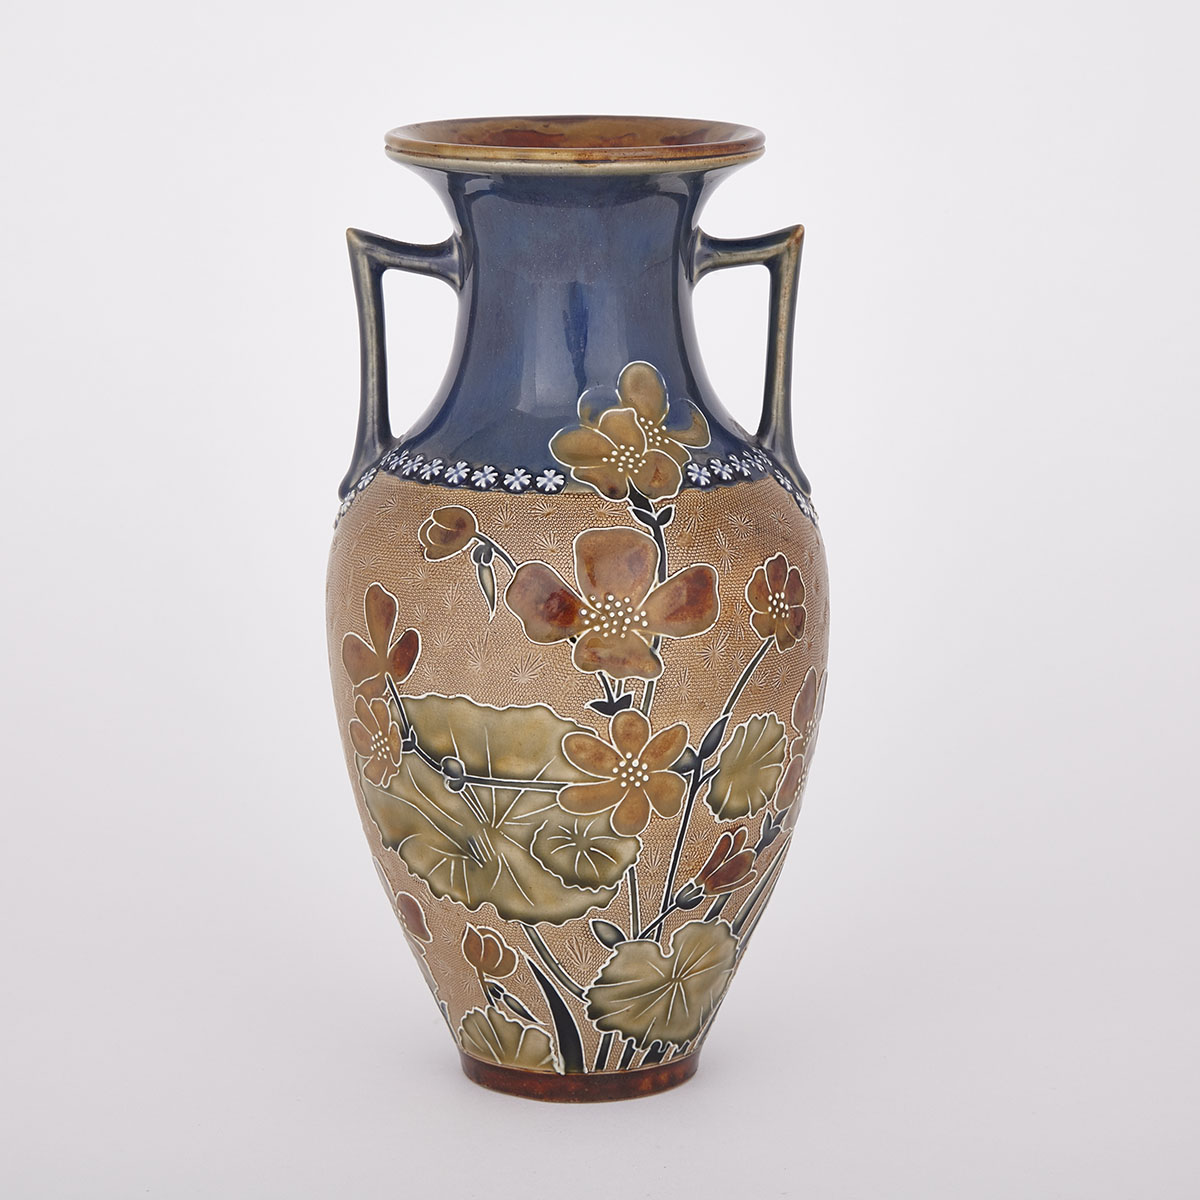 Royal Doulton ‘Art Union of London’, Doulton & Slater’s Patent Stoneware Vase, Eliza Simmance and Eleanor Tosen, early 20th century